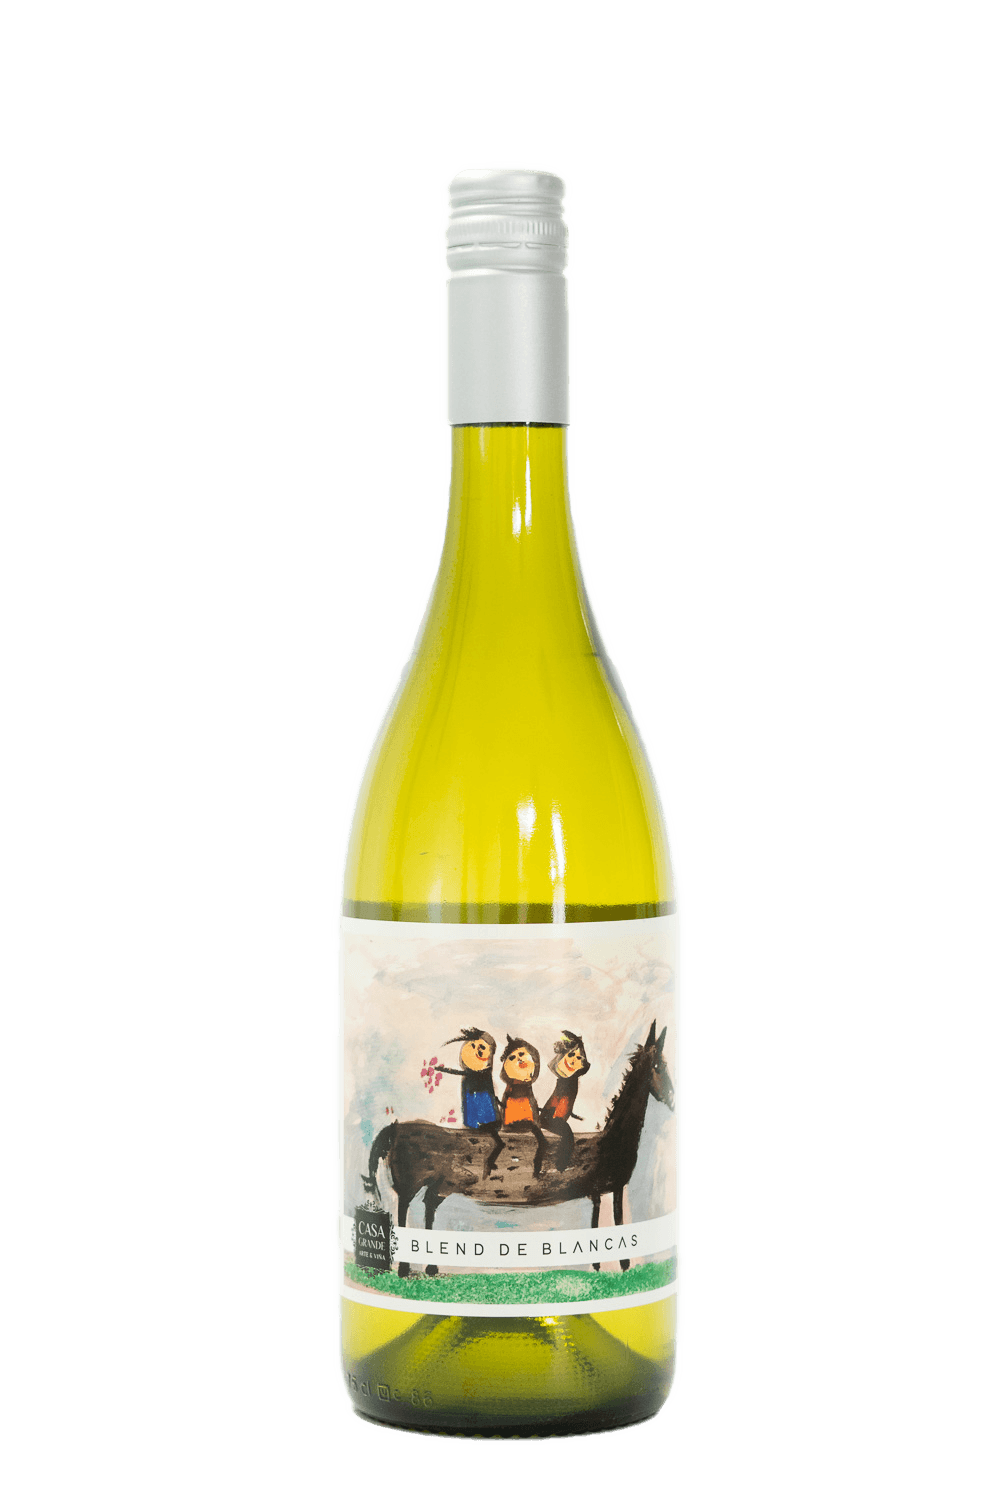 Casa Grande Arte e Viña - Blend de Blancas - The Blend Wines